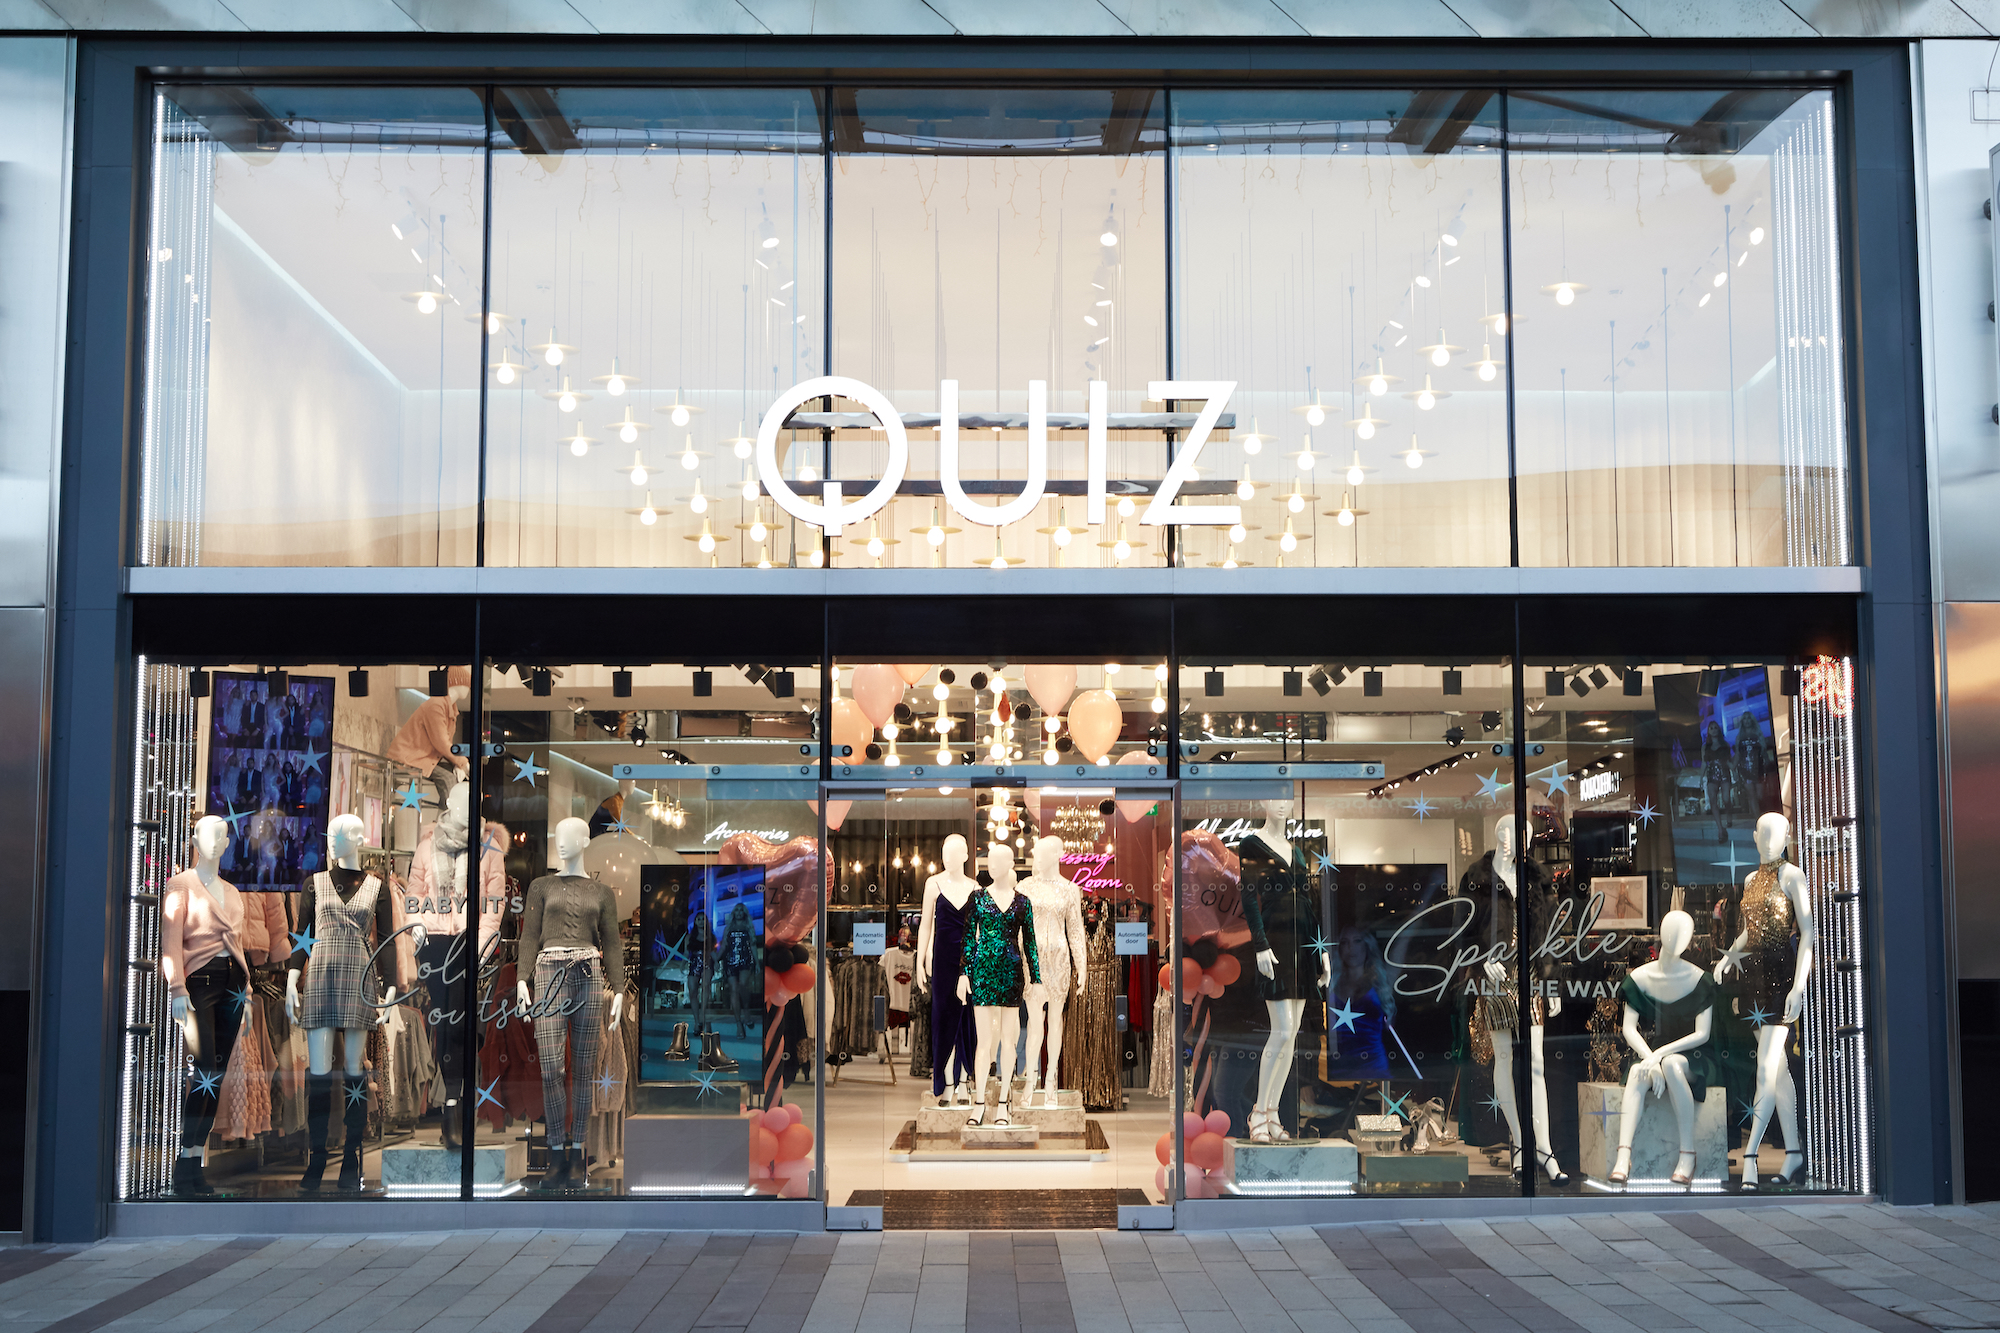 Glasgow clothing brand Quiz faces financial turbulence amid slumping sales